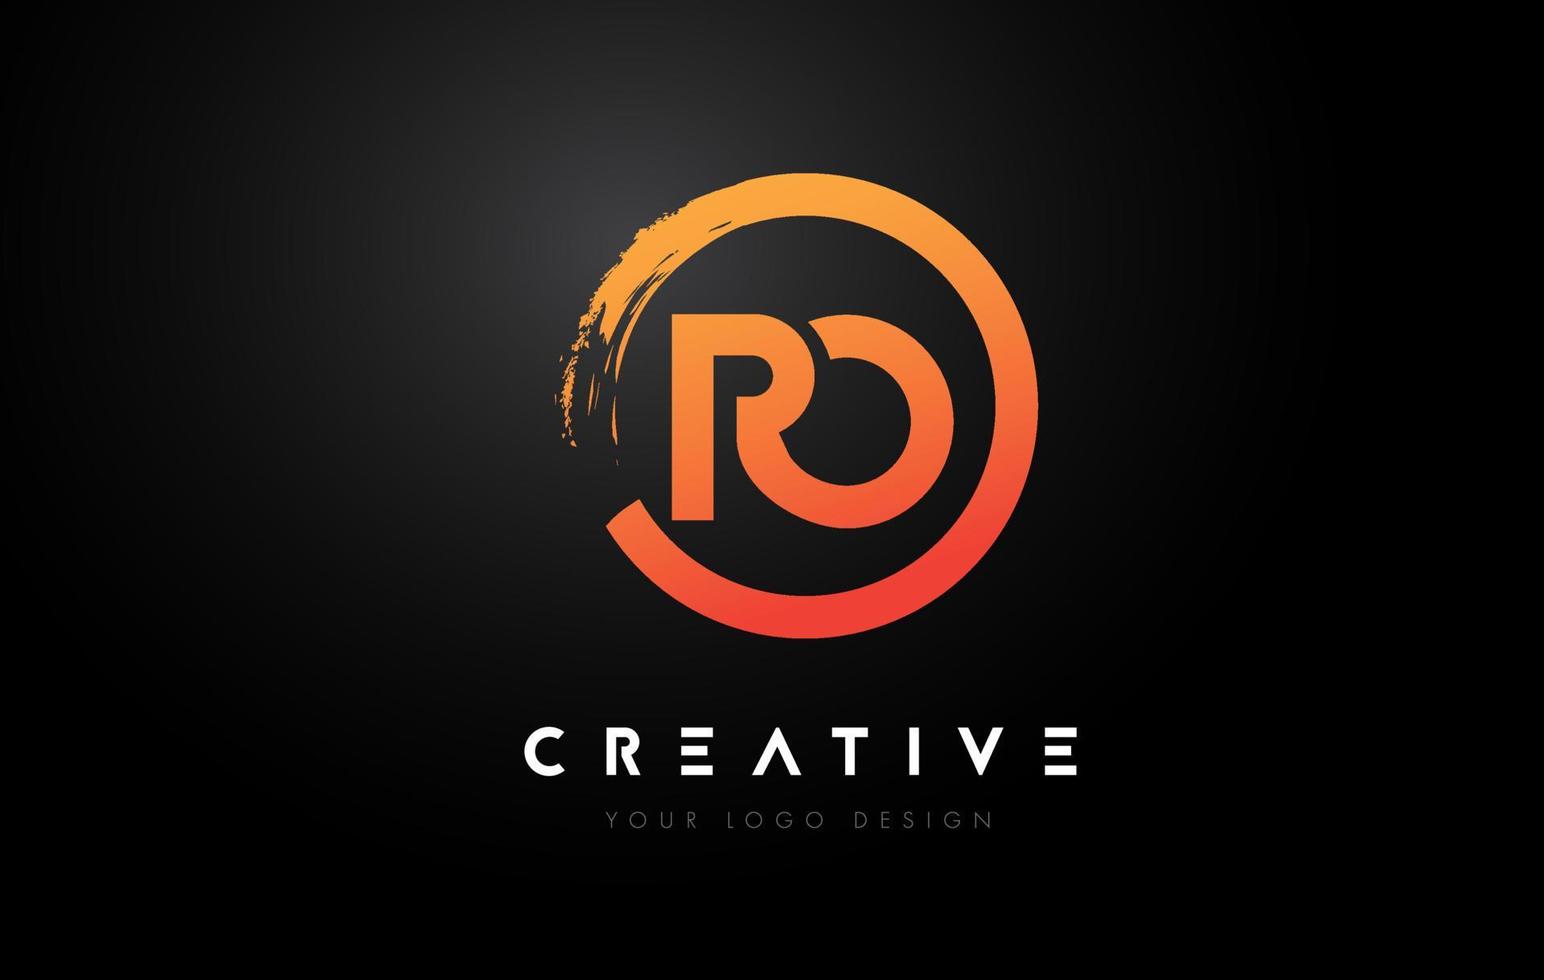 Orange RO Circular Letter Logo with Circle Brush Design and Black Background. vector